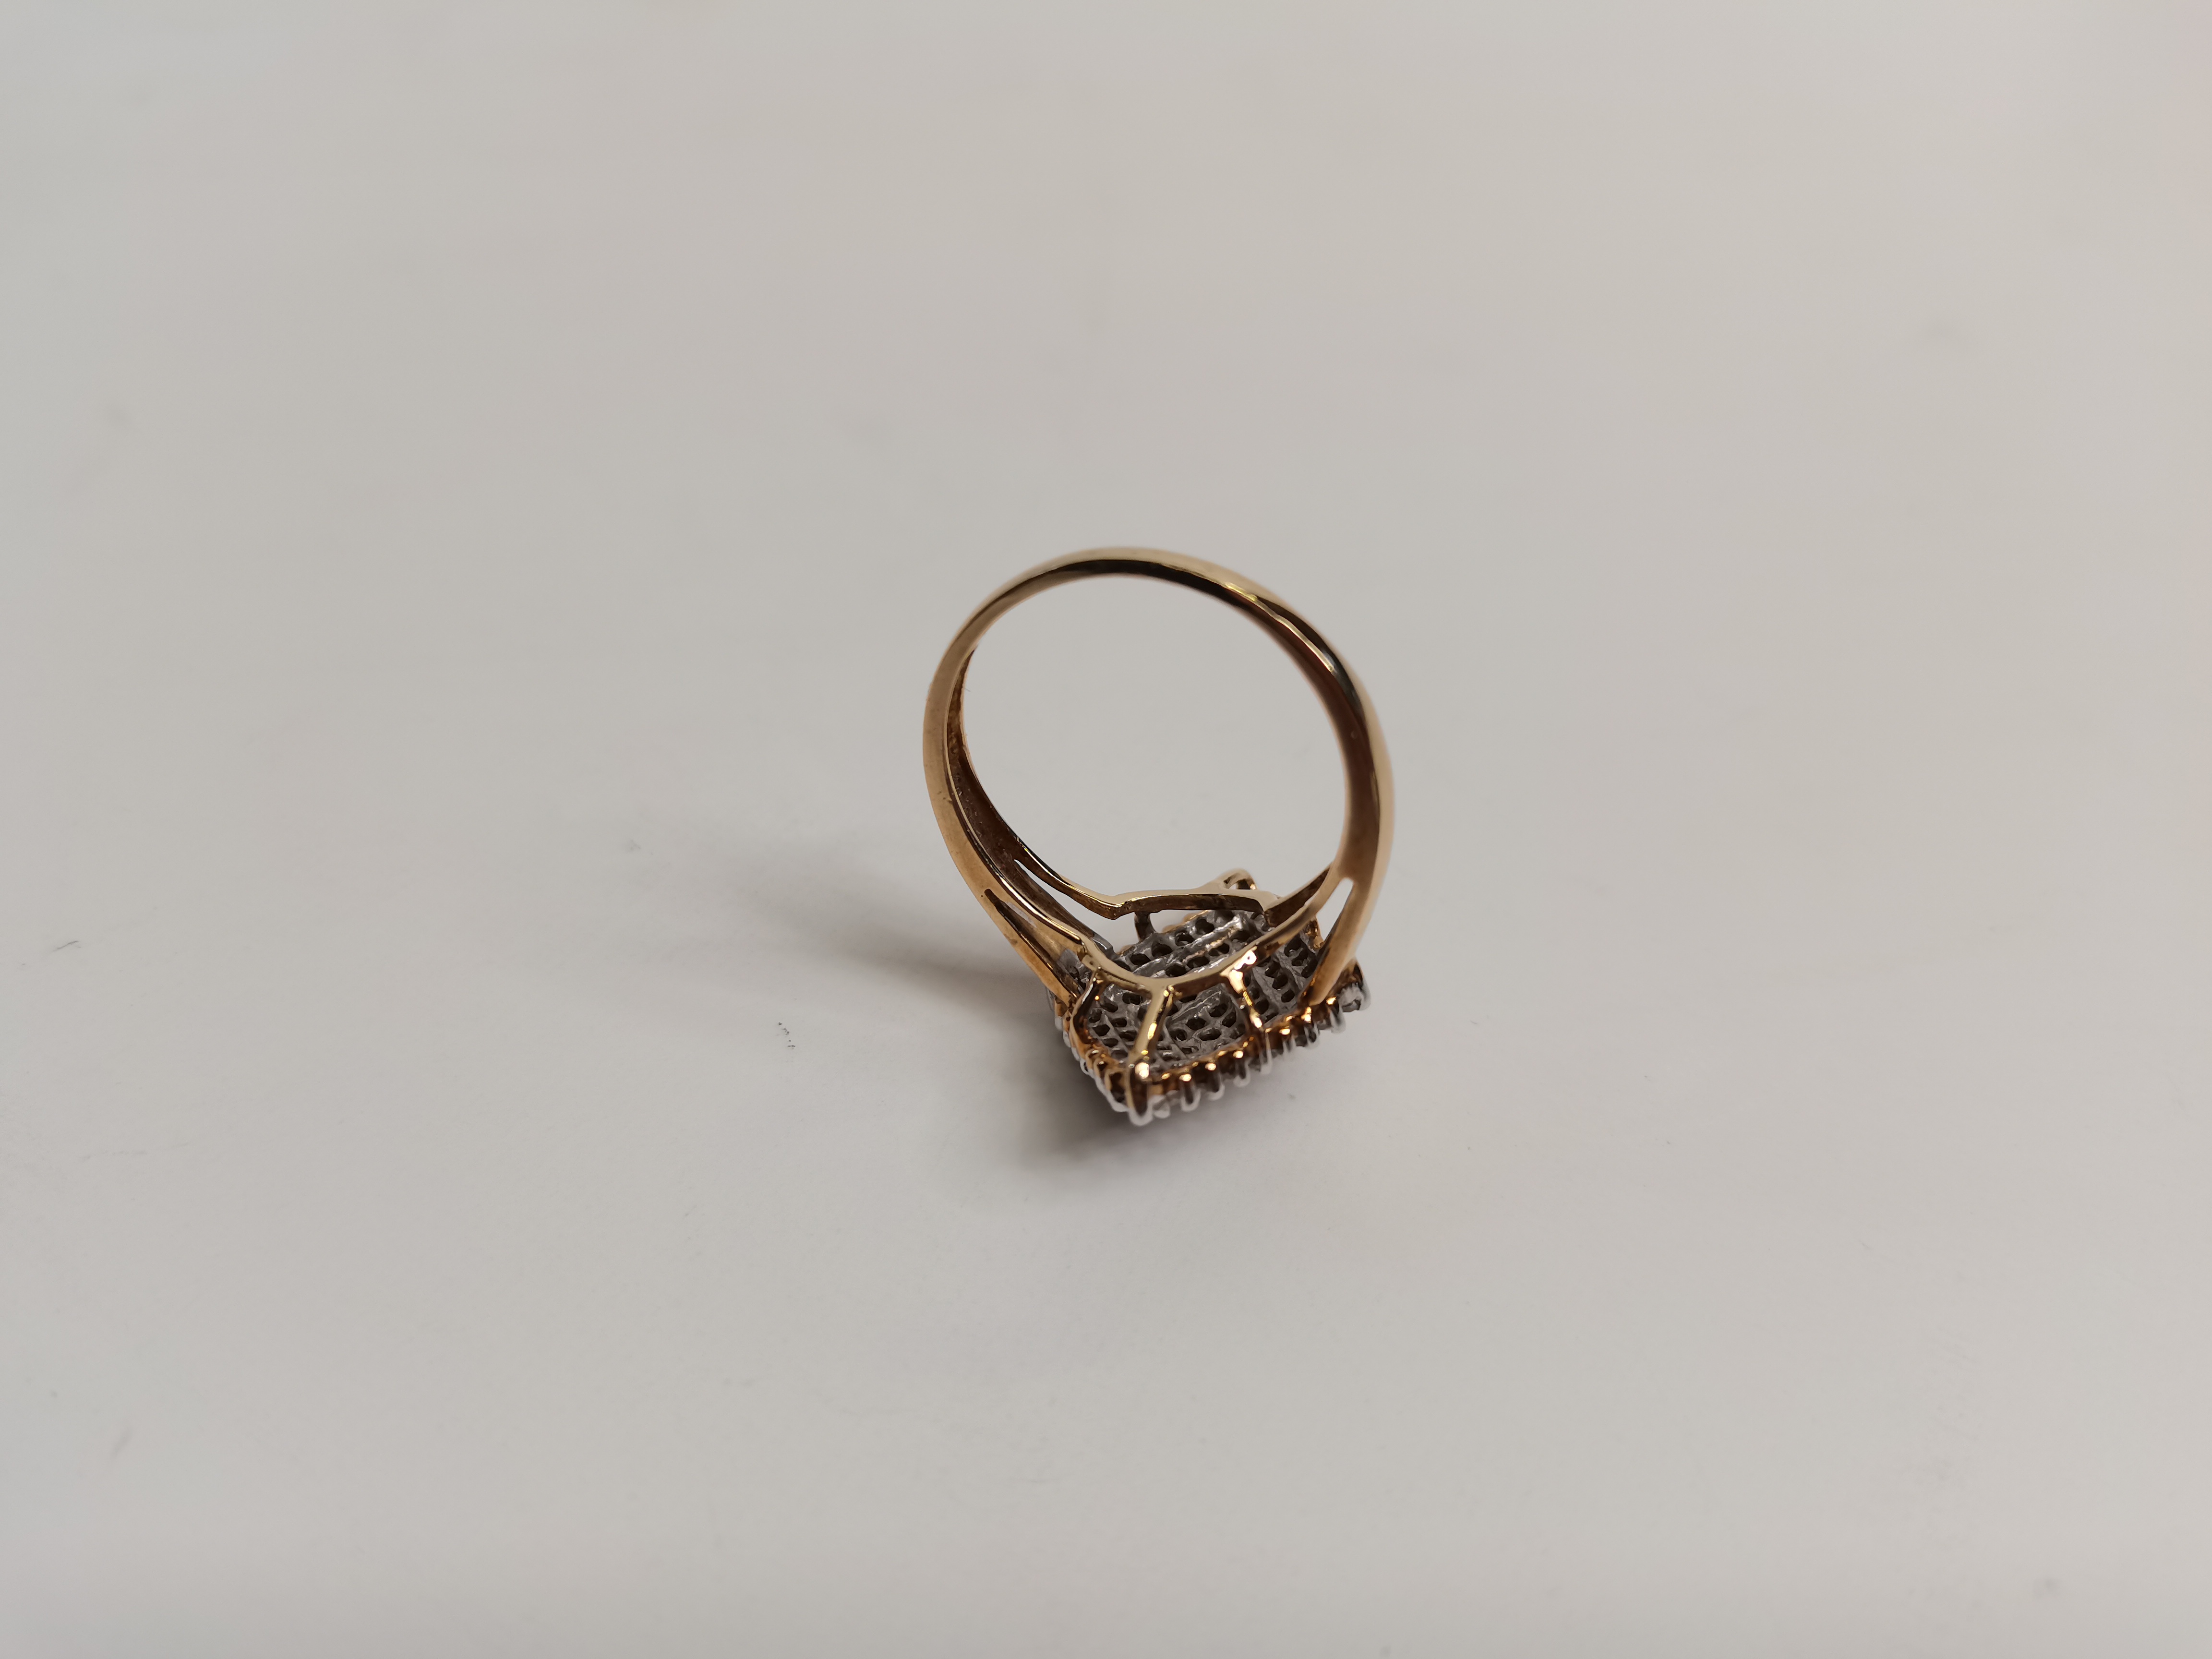 Diamond shaped dress ring size Q - Image 2 of 2